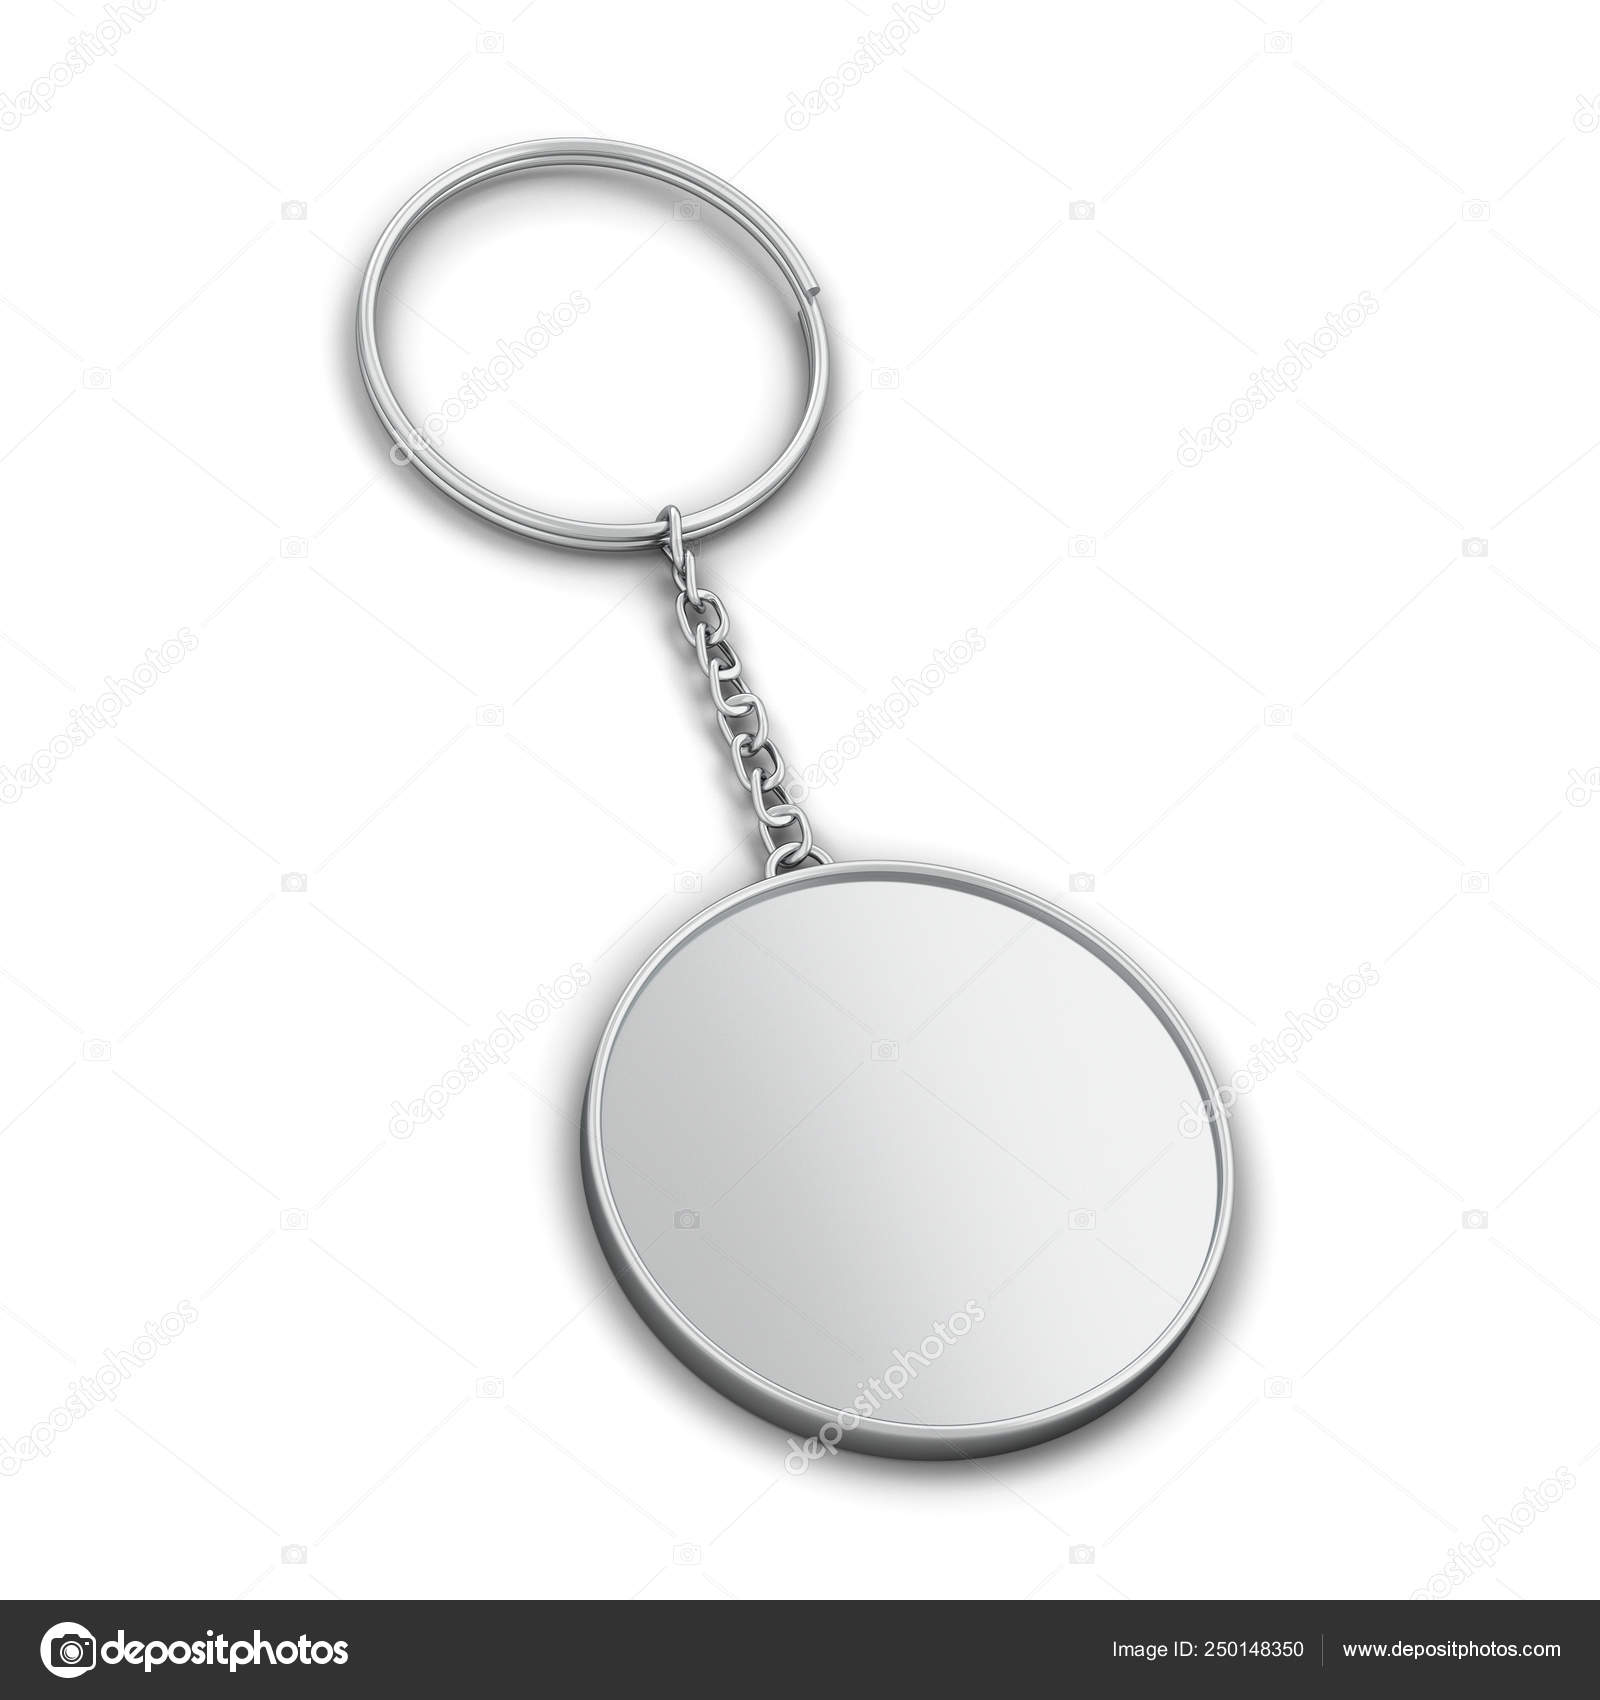 Download Blank Metallic Keychain Mockup Stock Photo Image By C Montego 250148350